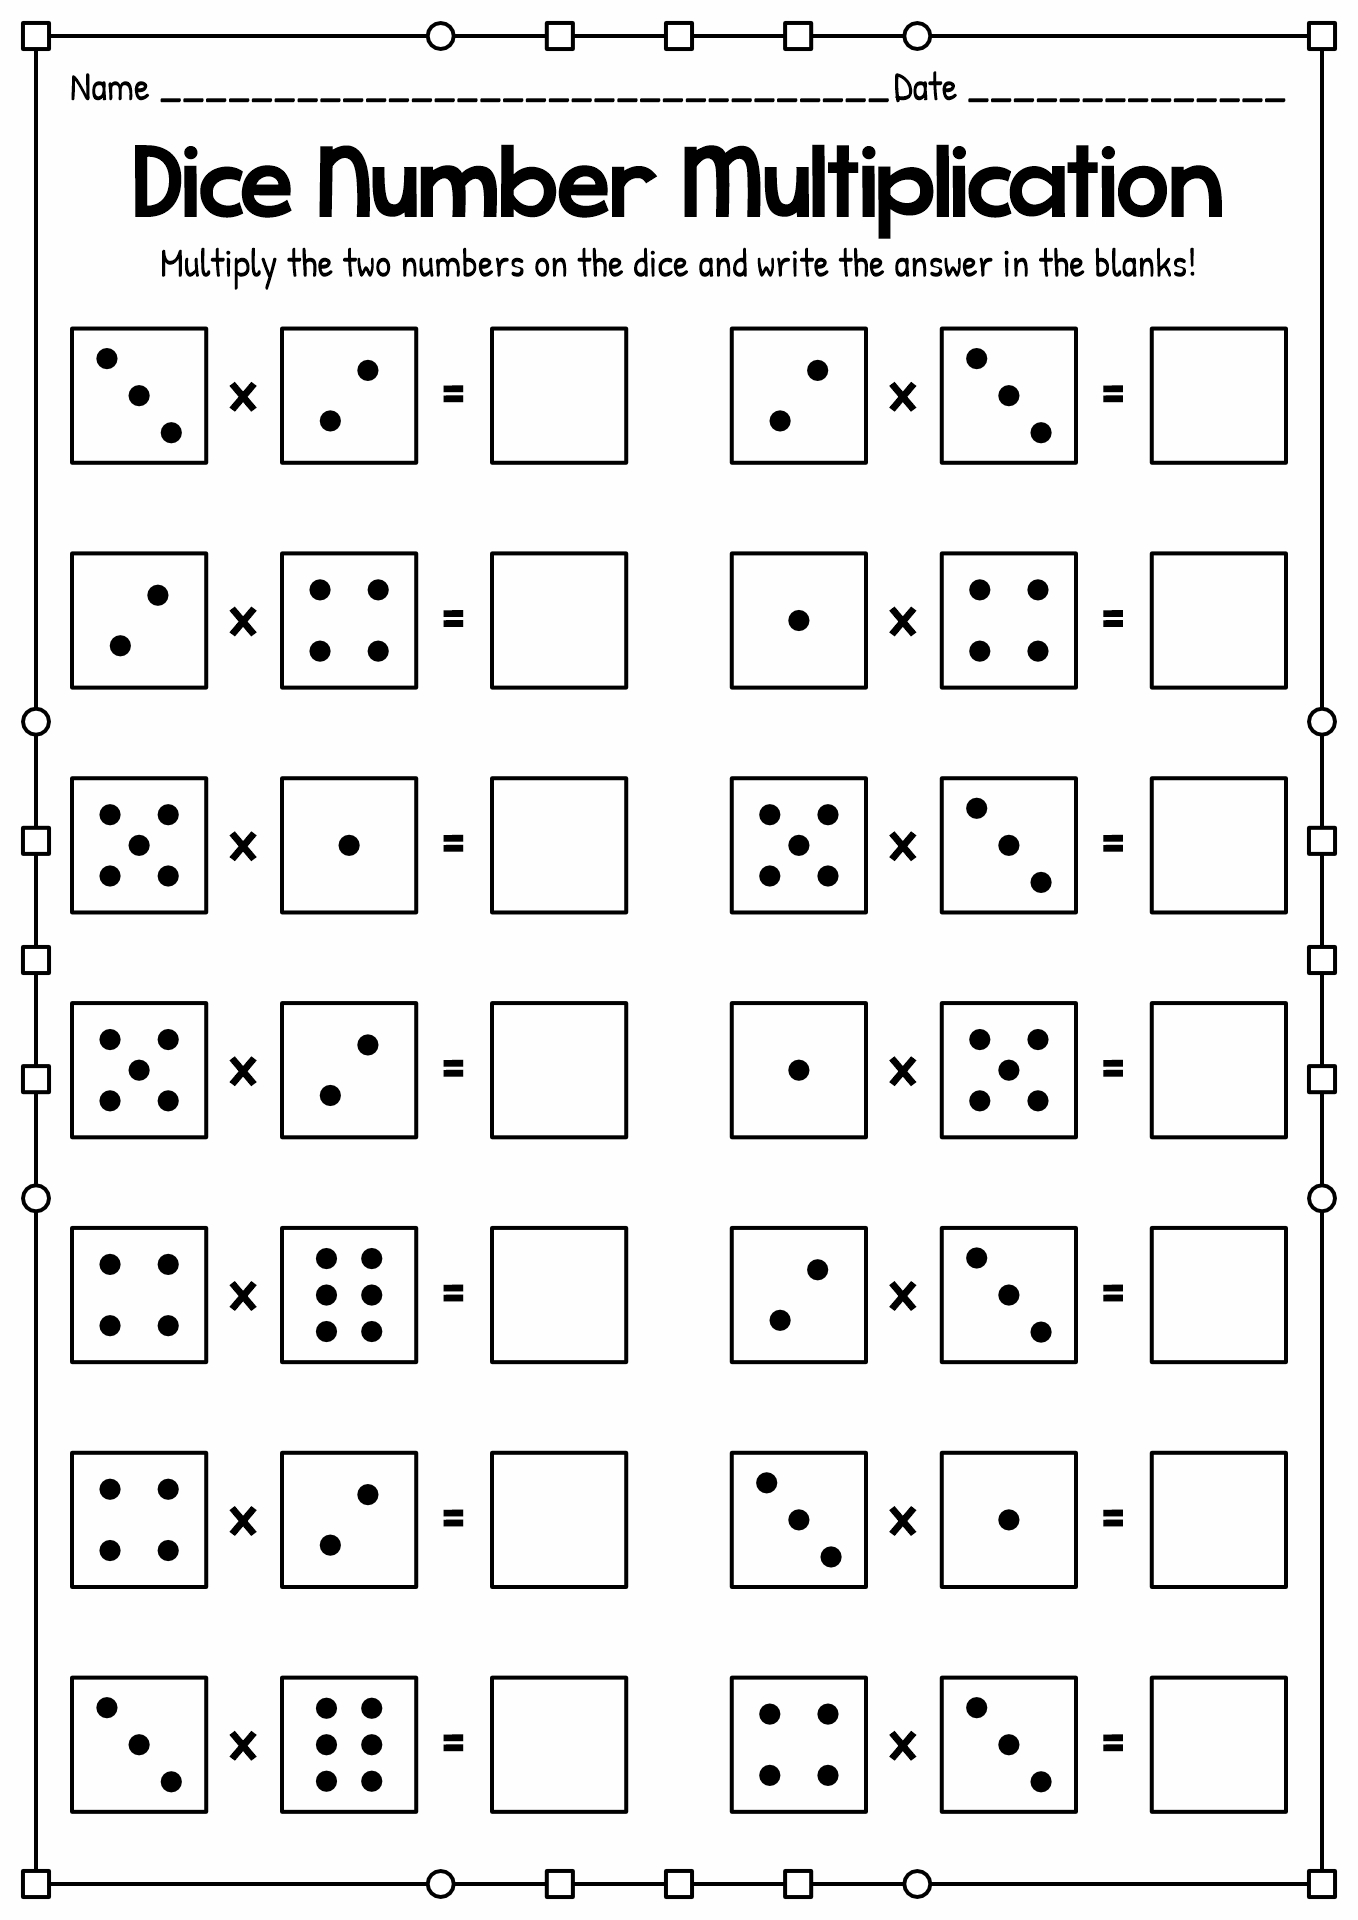 Multiplication Dice Game Worksheet